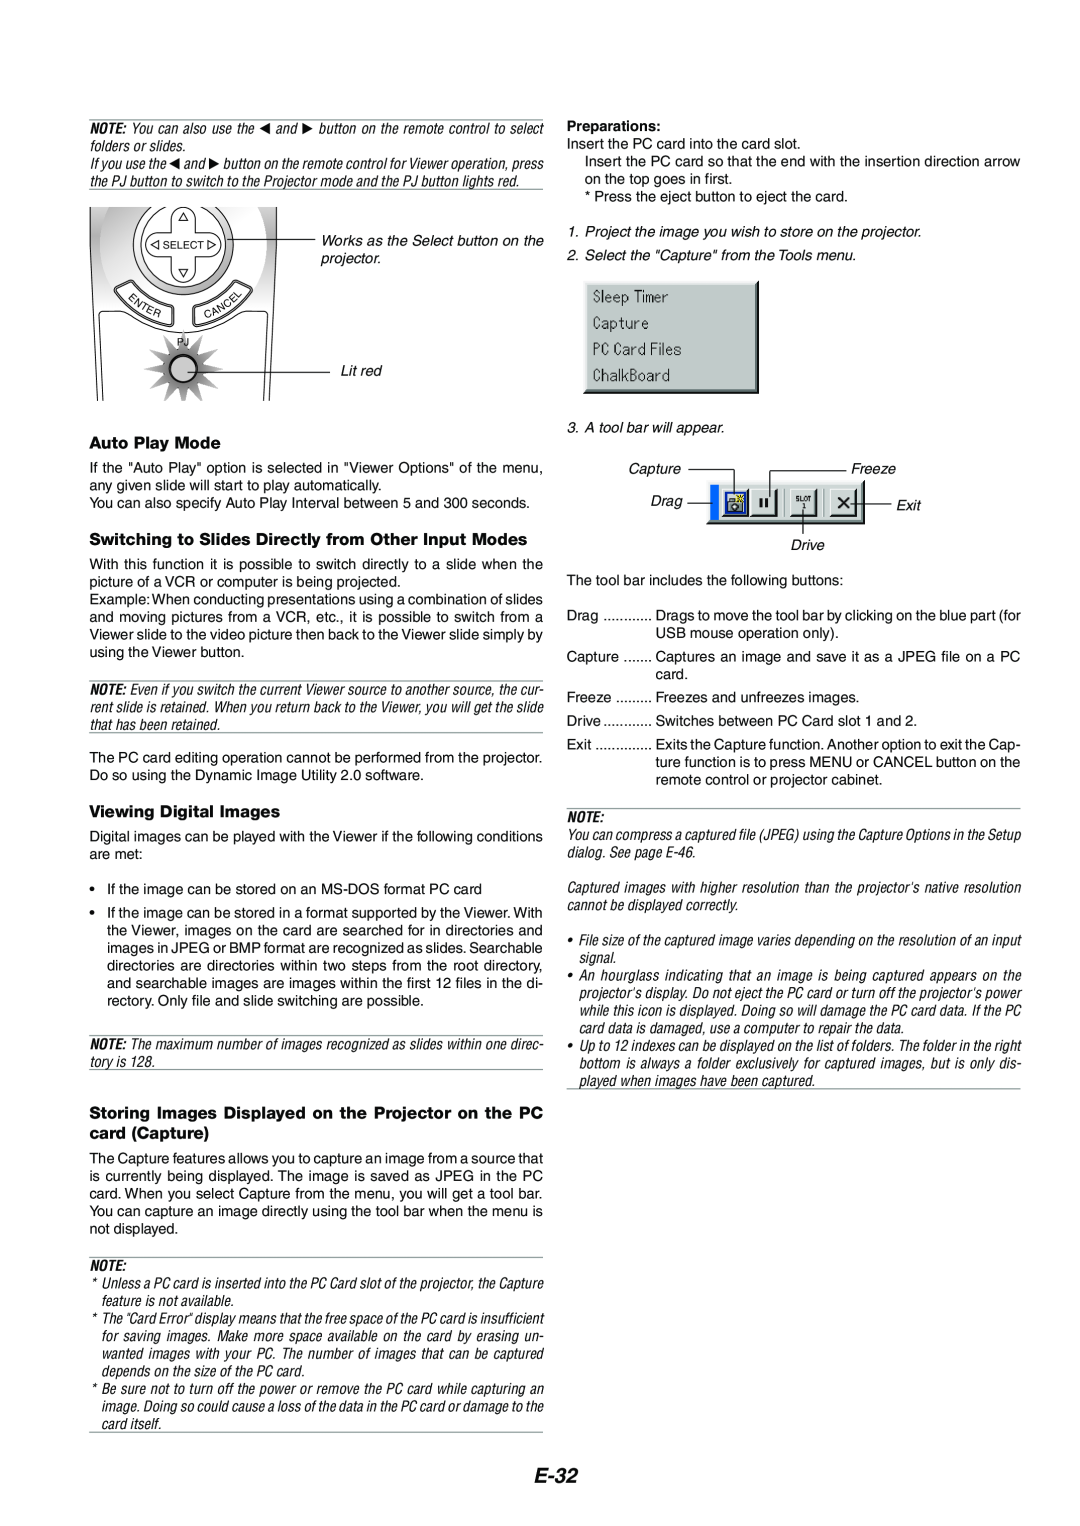 NEC MT1075/MT1065 user manual E-32, Auto Play Mode, Viewing Digital Images, Preparations 